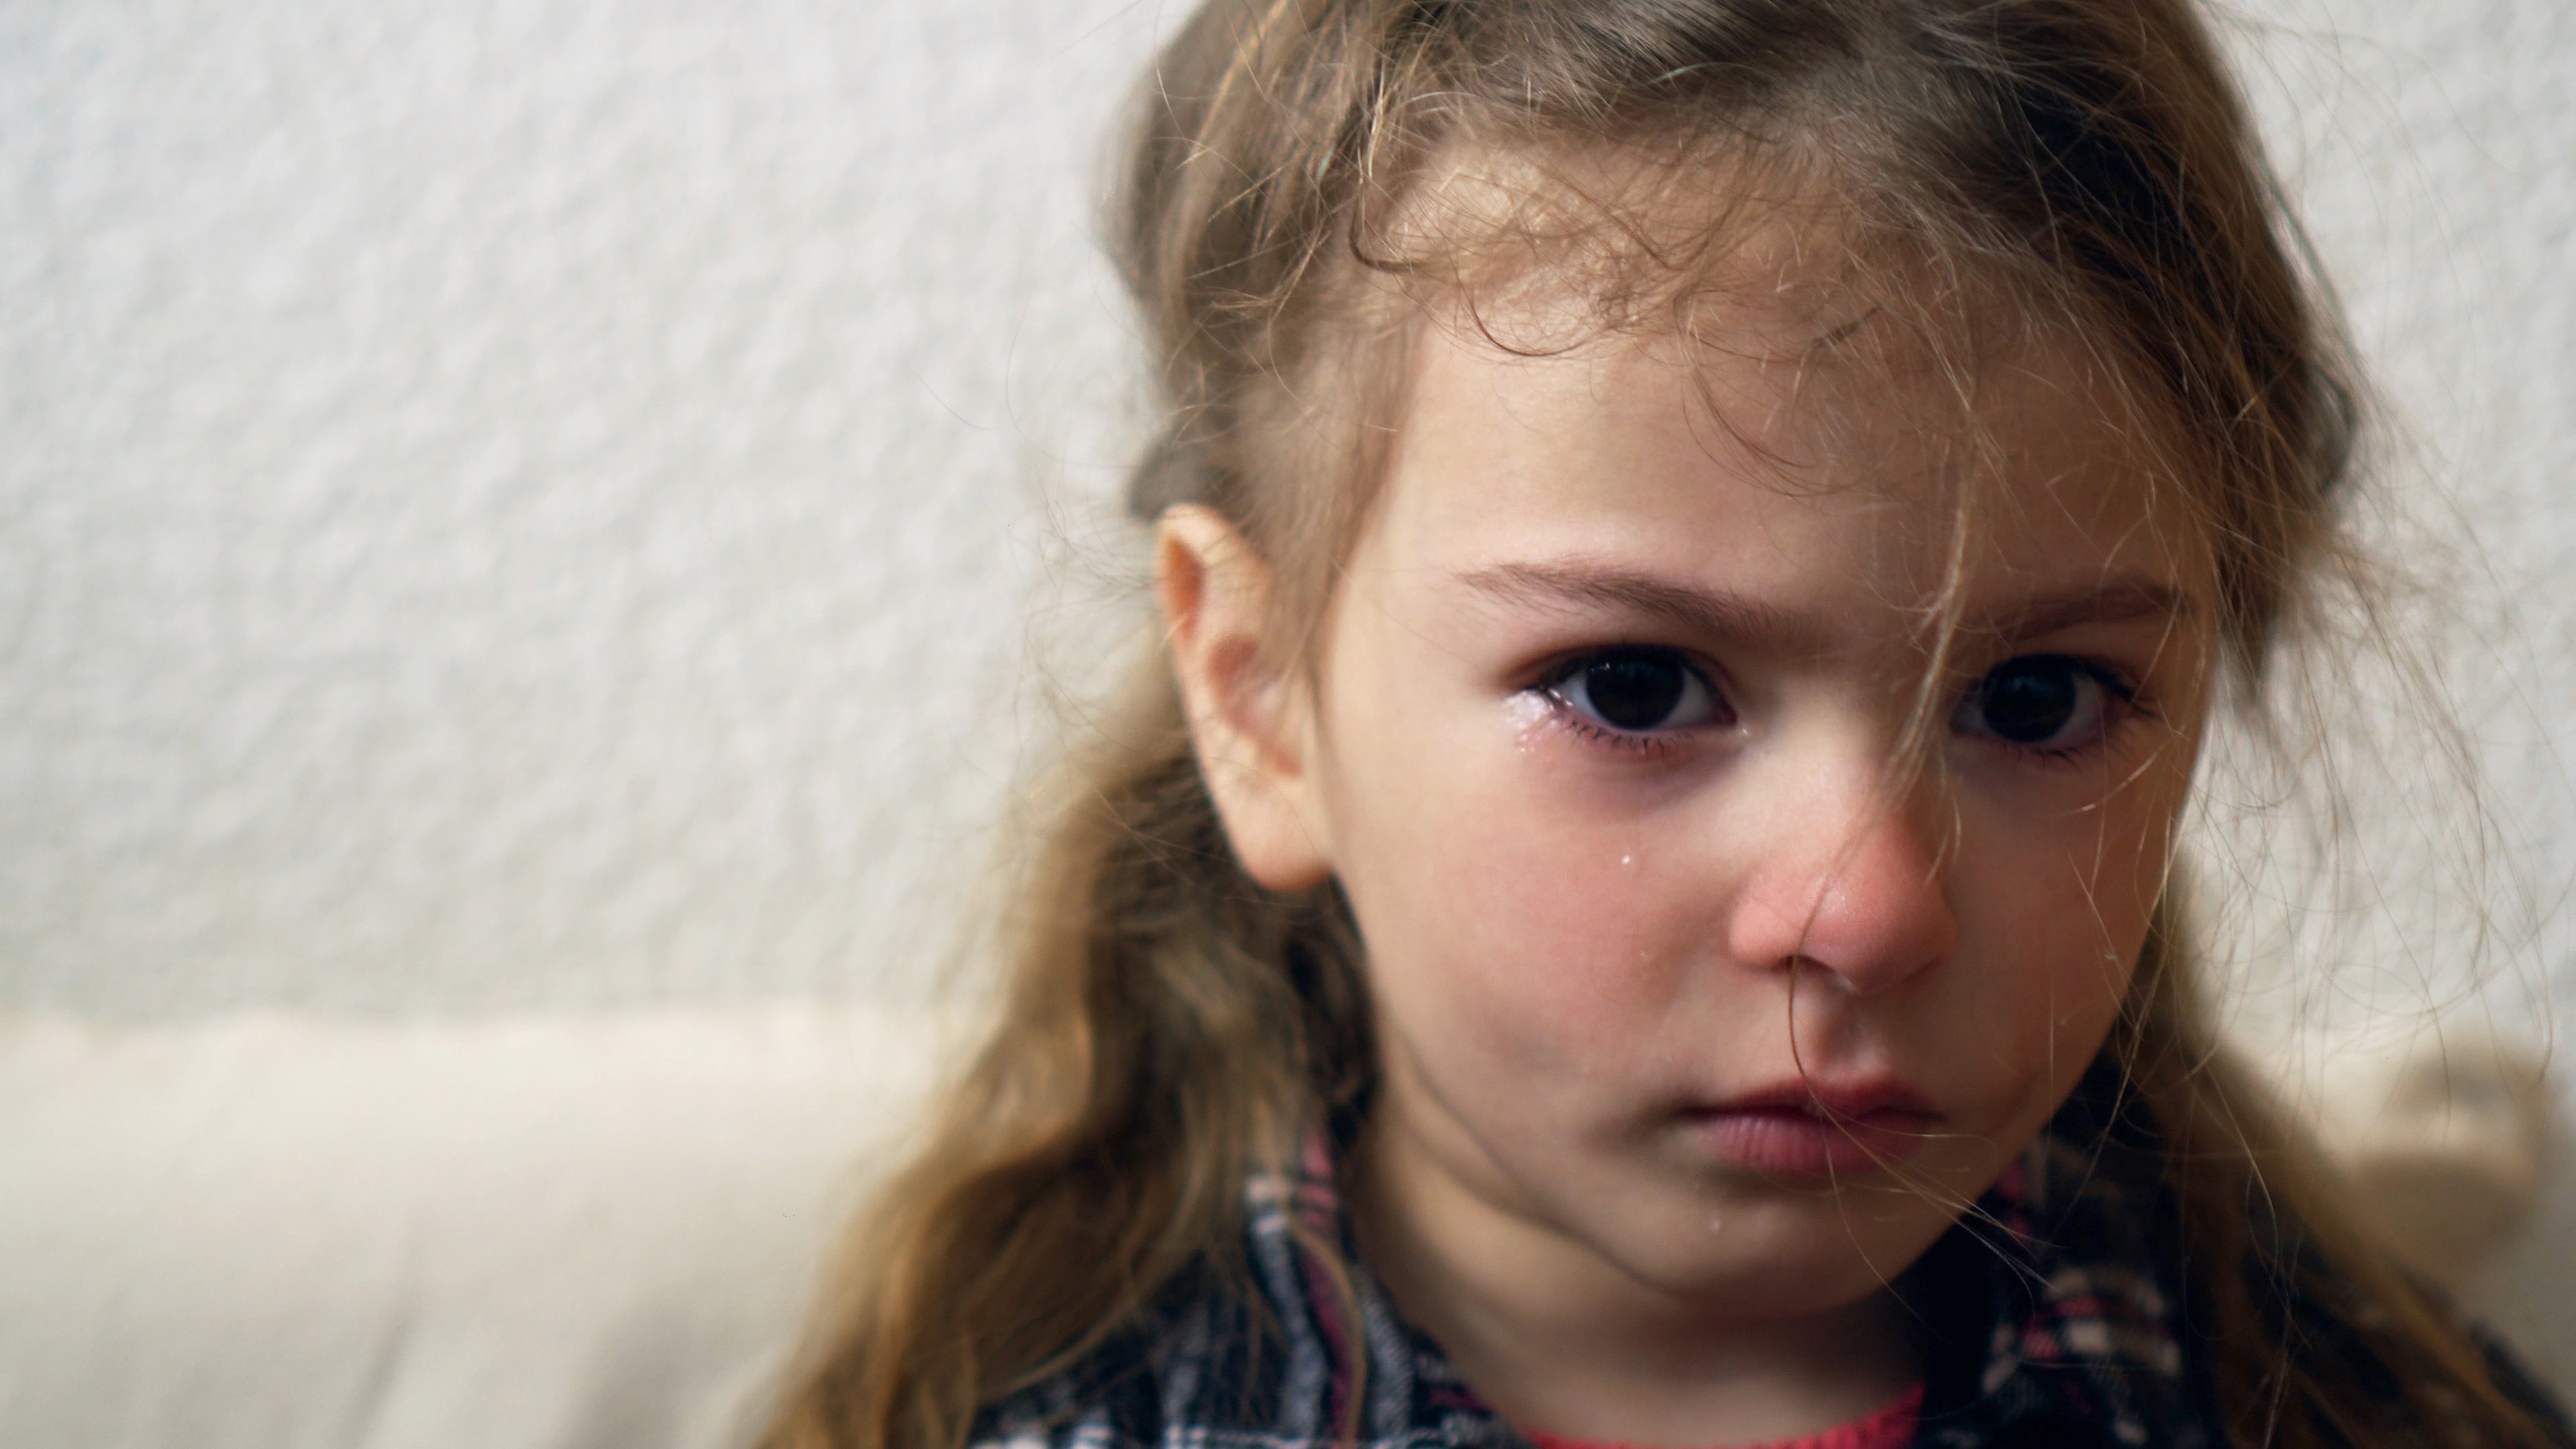 Crying girl | Source: Shutterstock.com